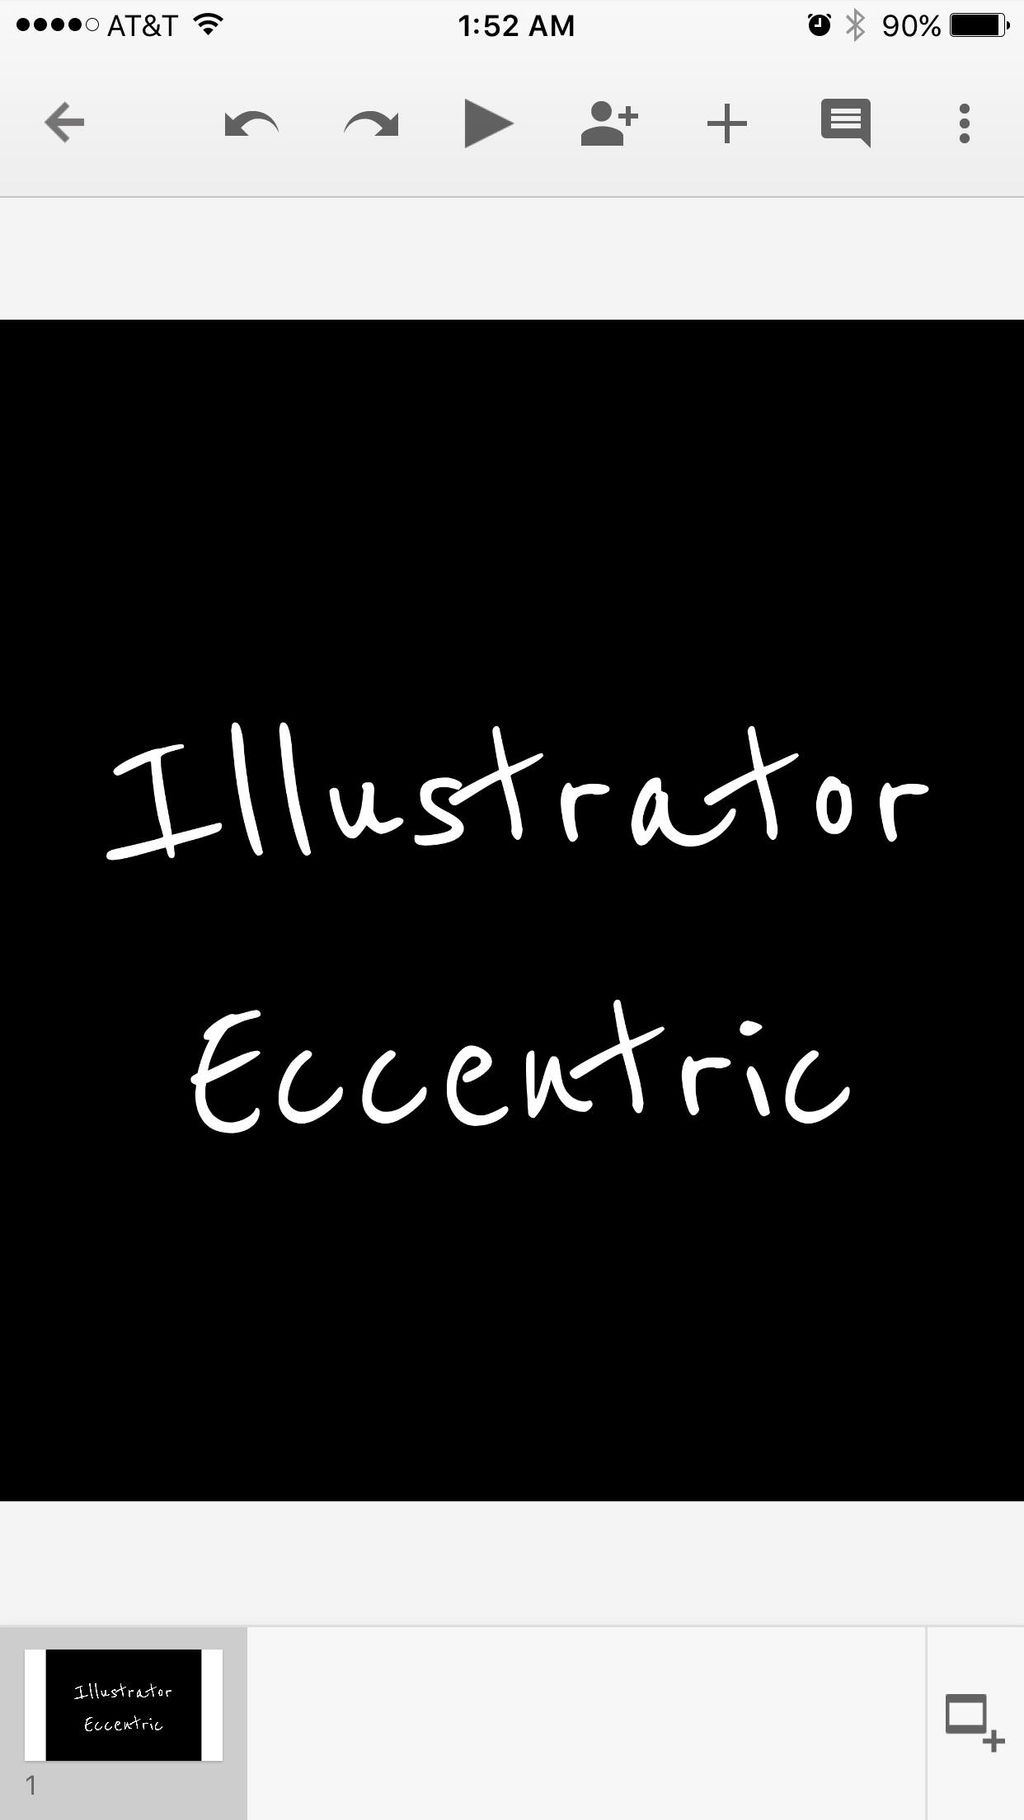 Illustrator Eccentric